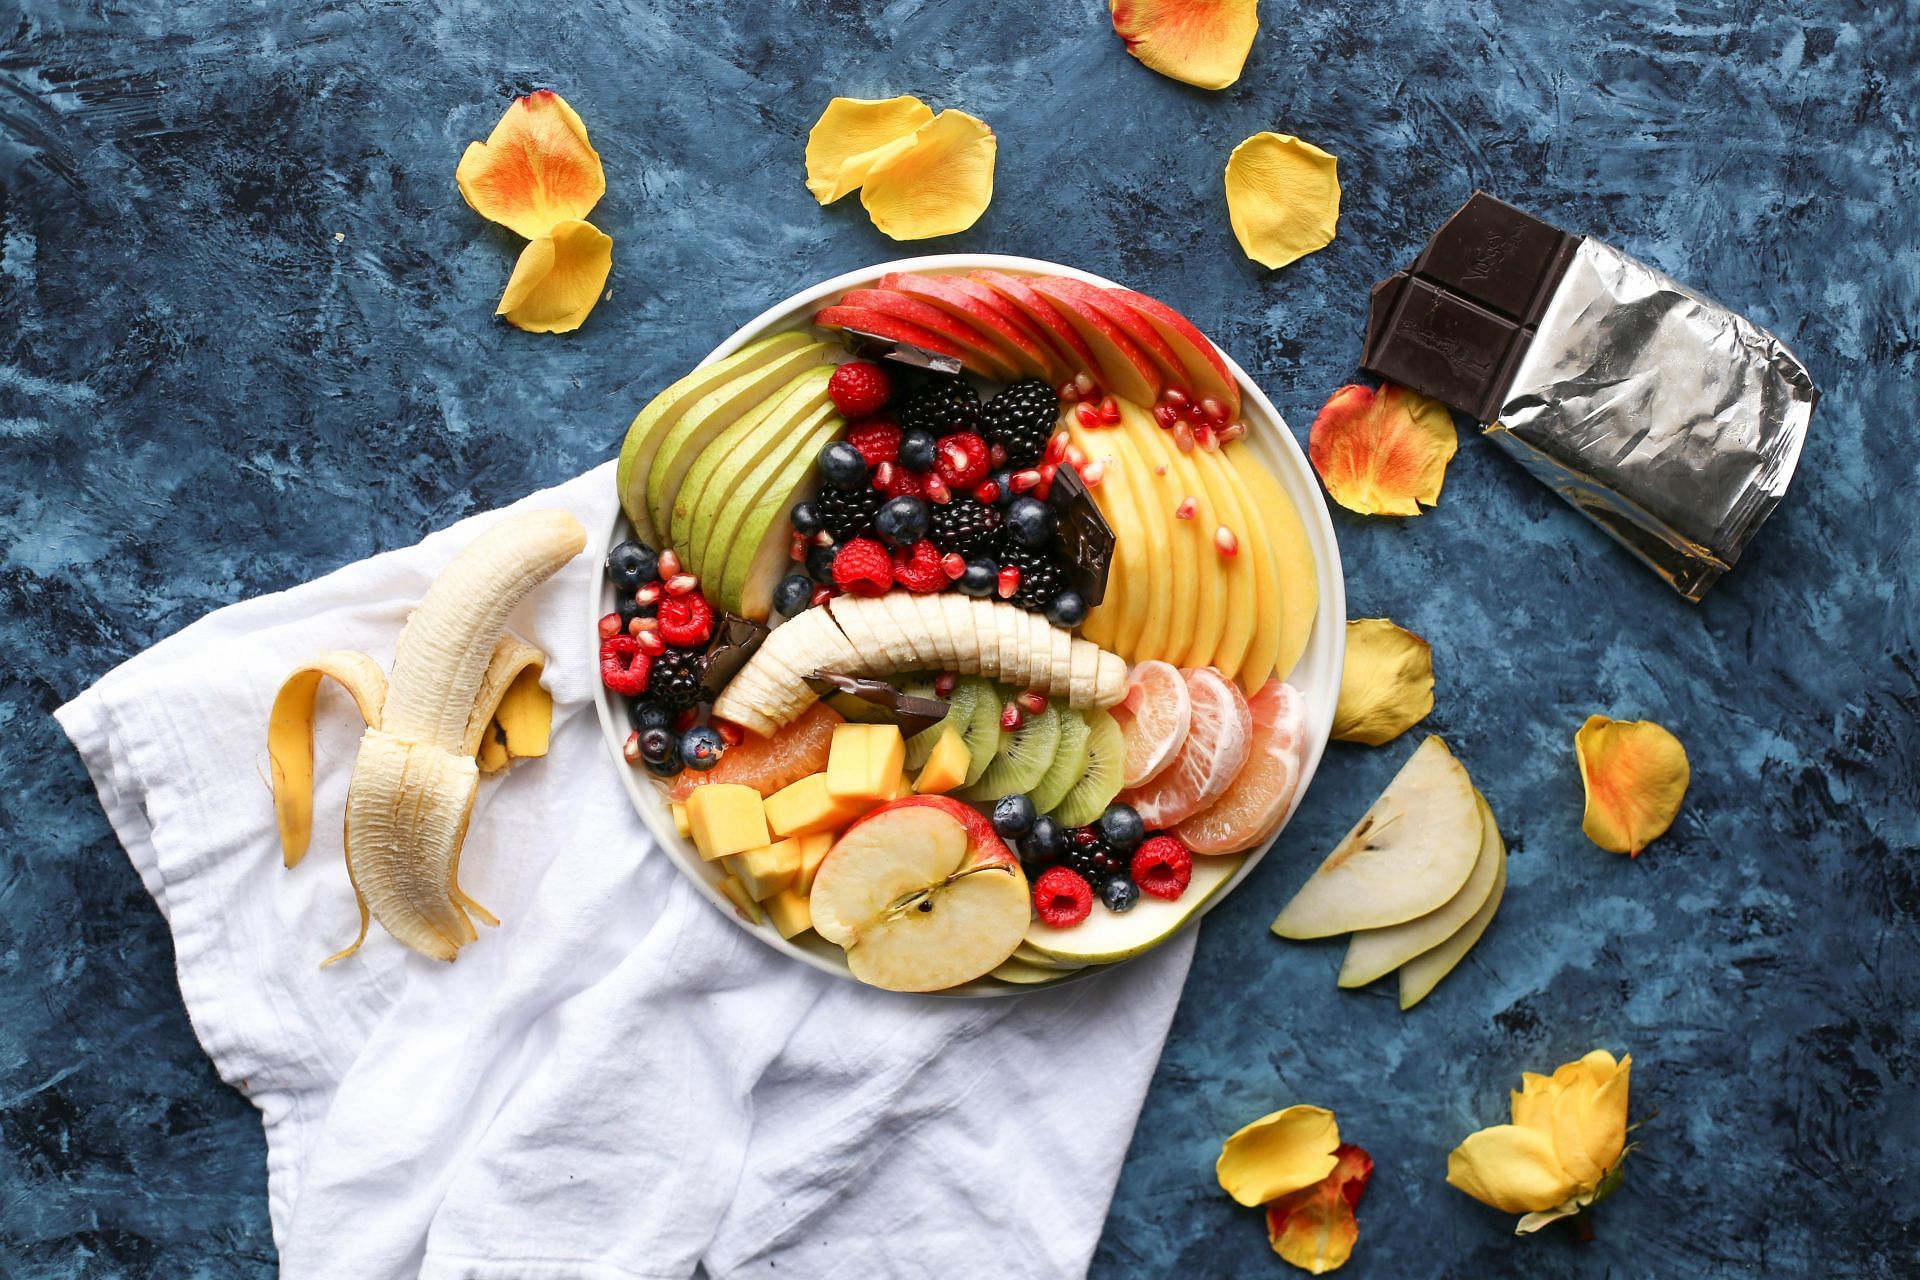 A plate full of fruits. (Image via Unsplash/ Brenda Godinez)